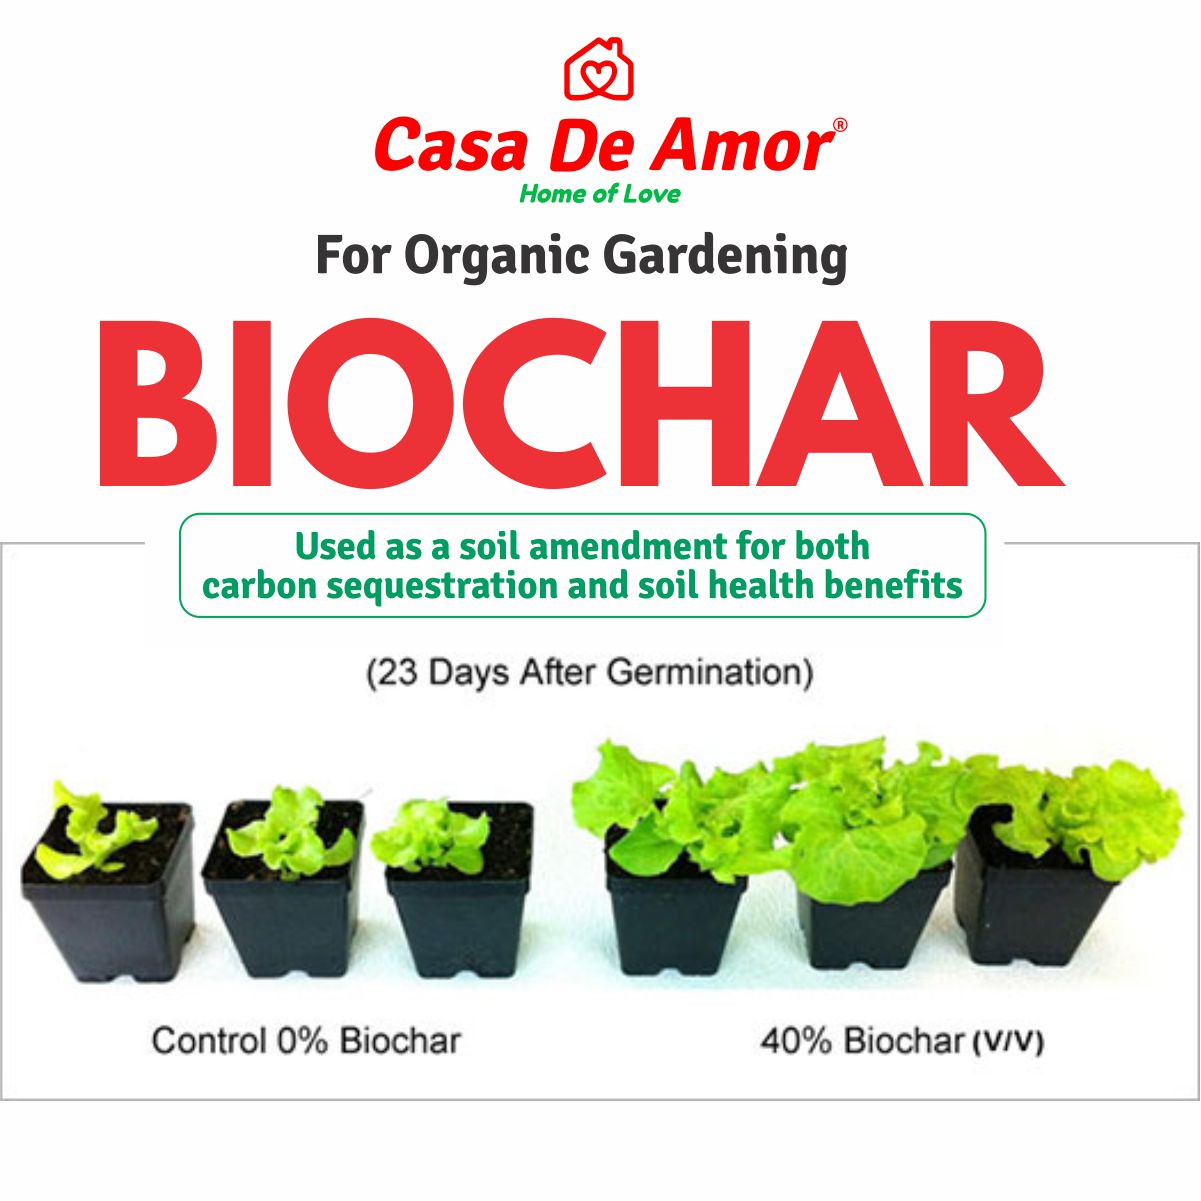 Casa De Amor Biochar Perfect Soil Amendment for Gardening (900 gm)